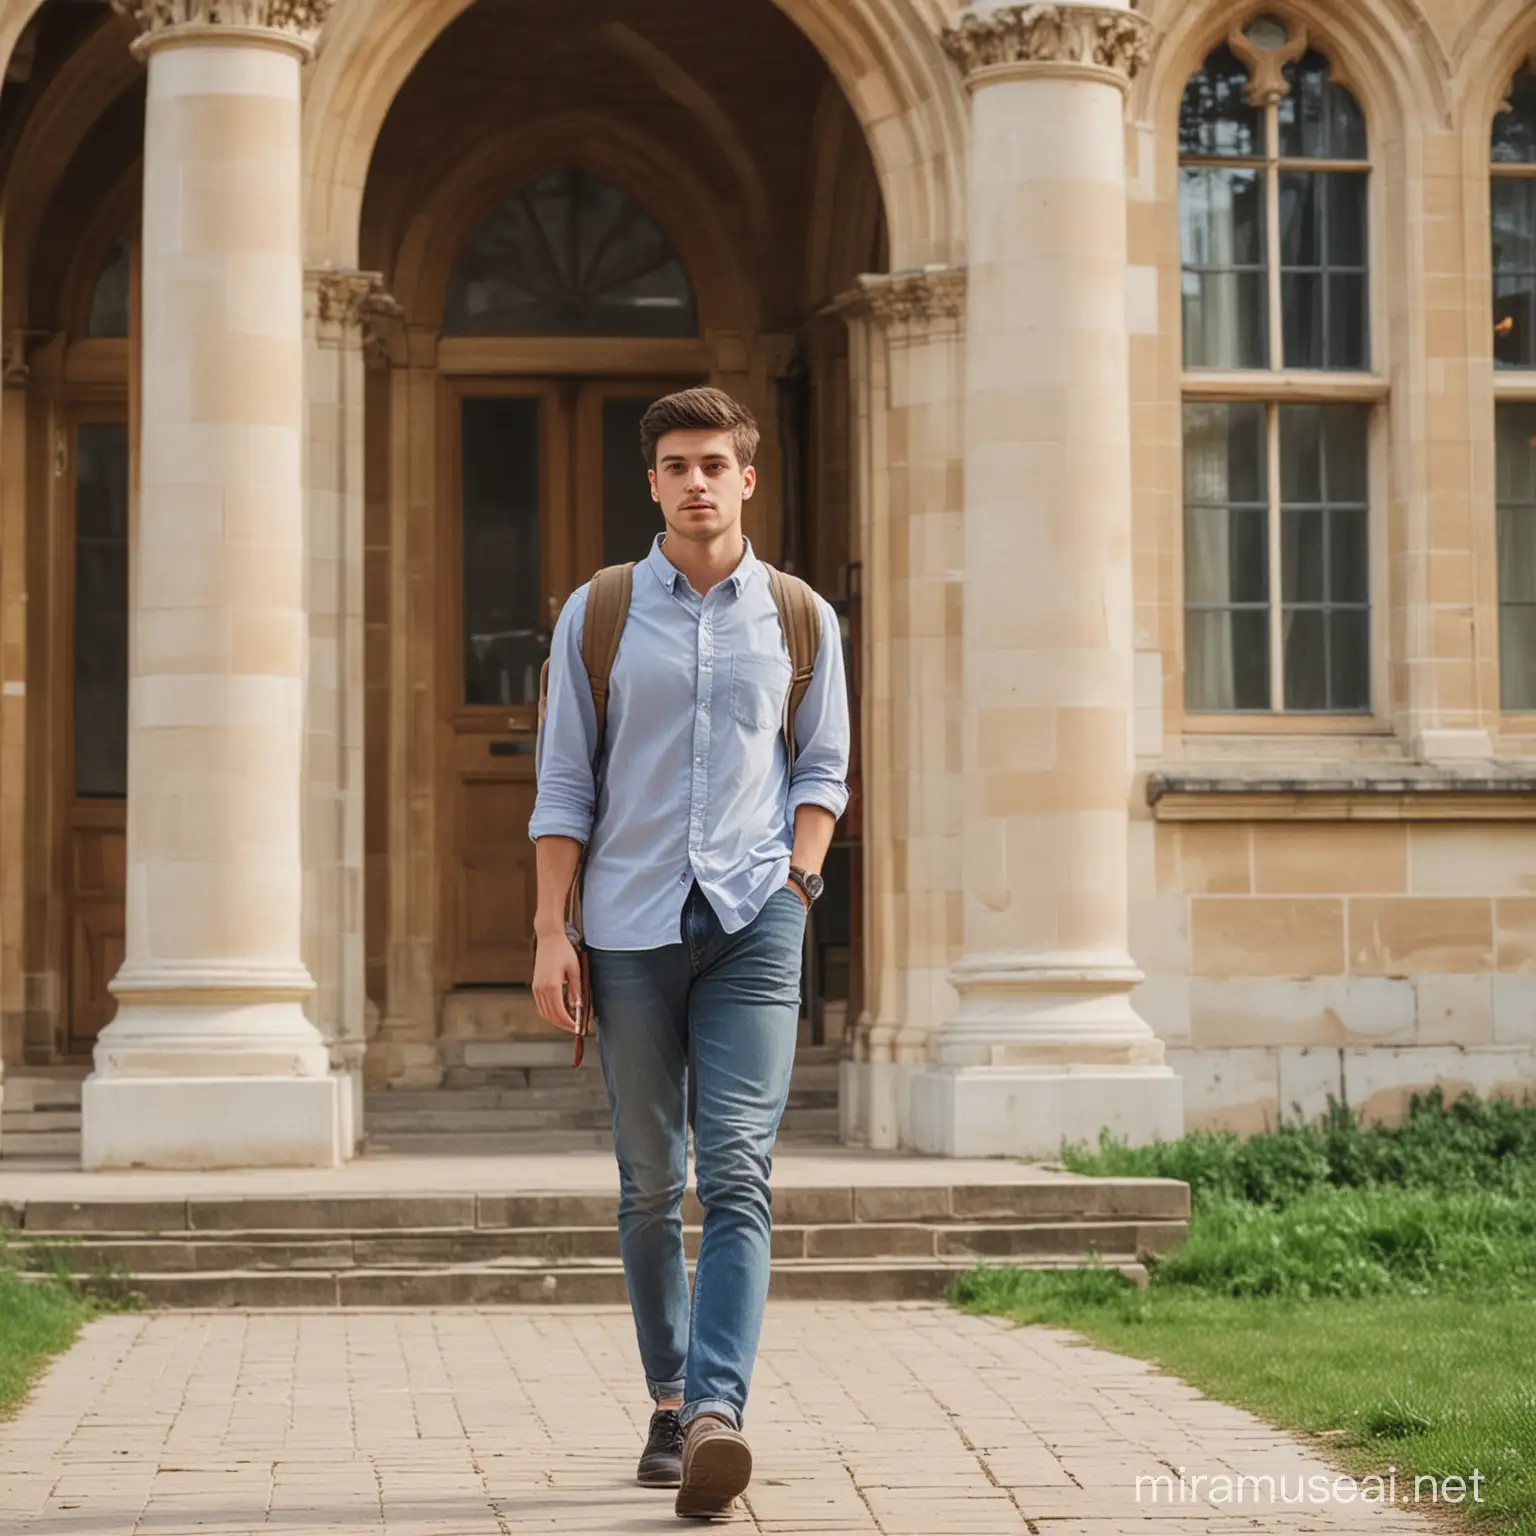 Contemplative University Student Walking